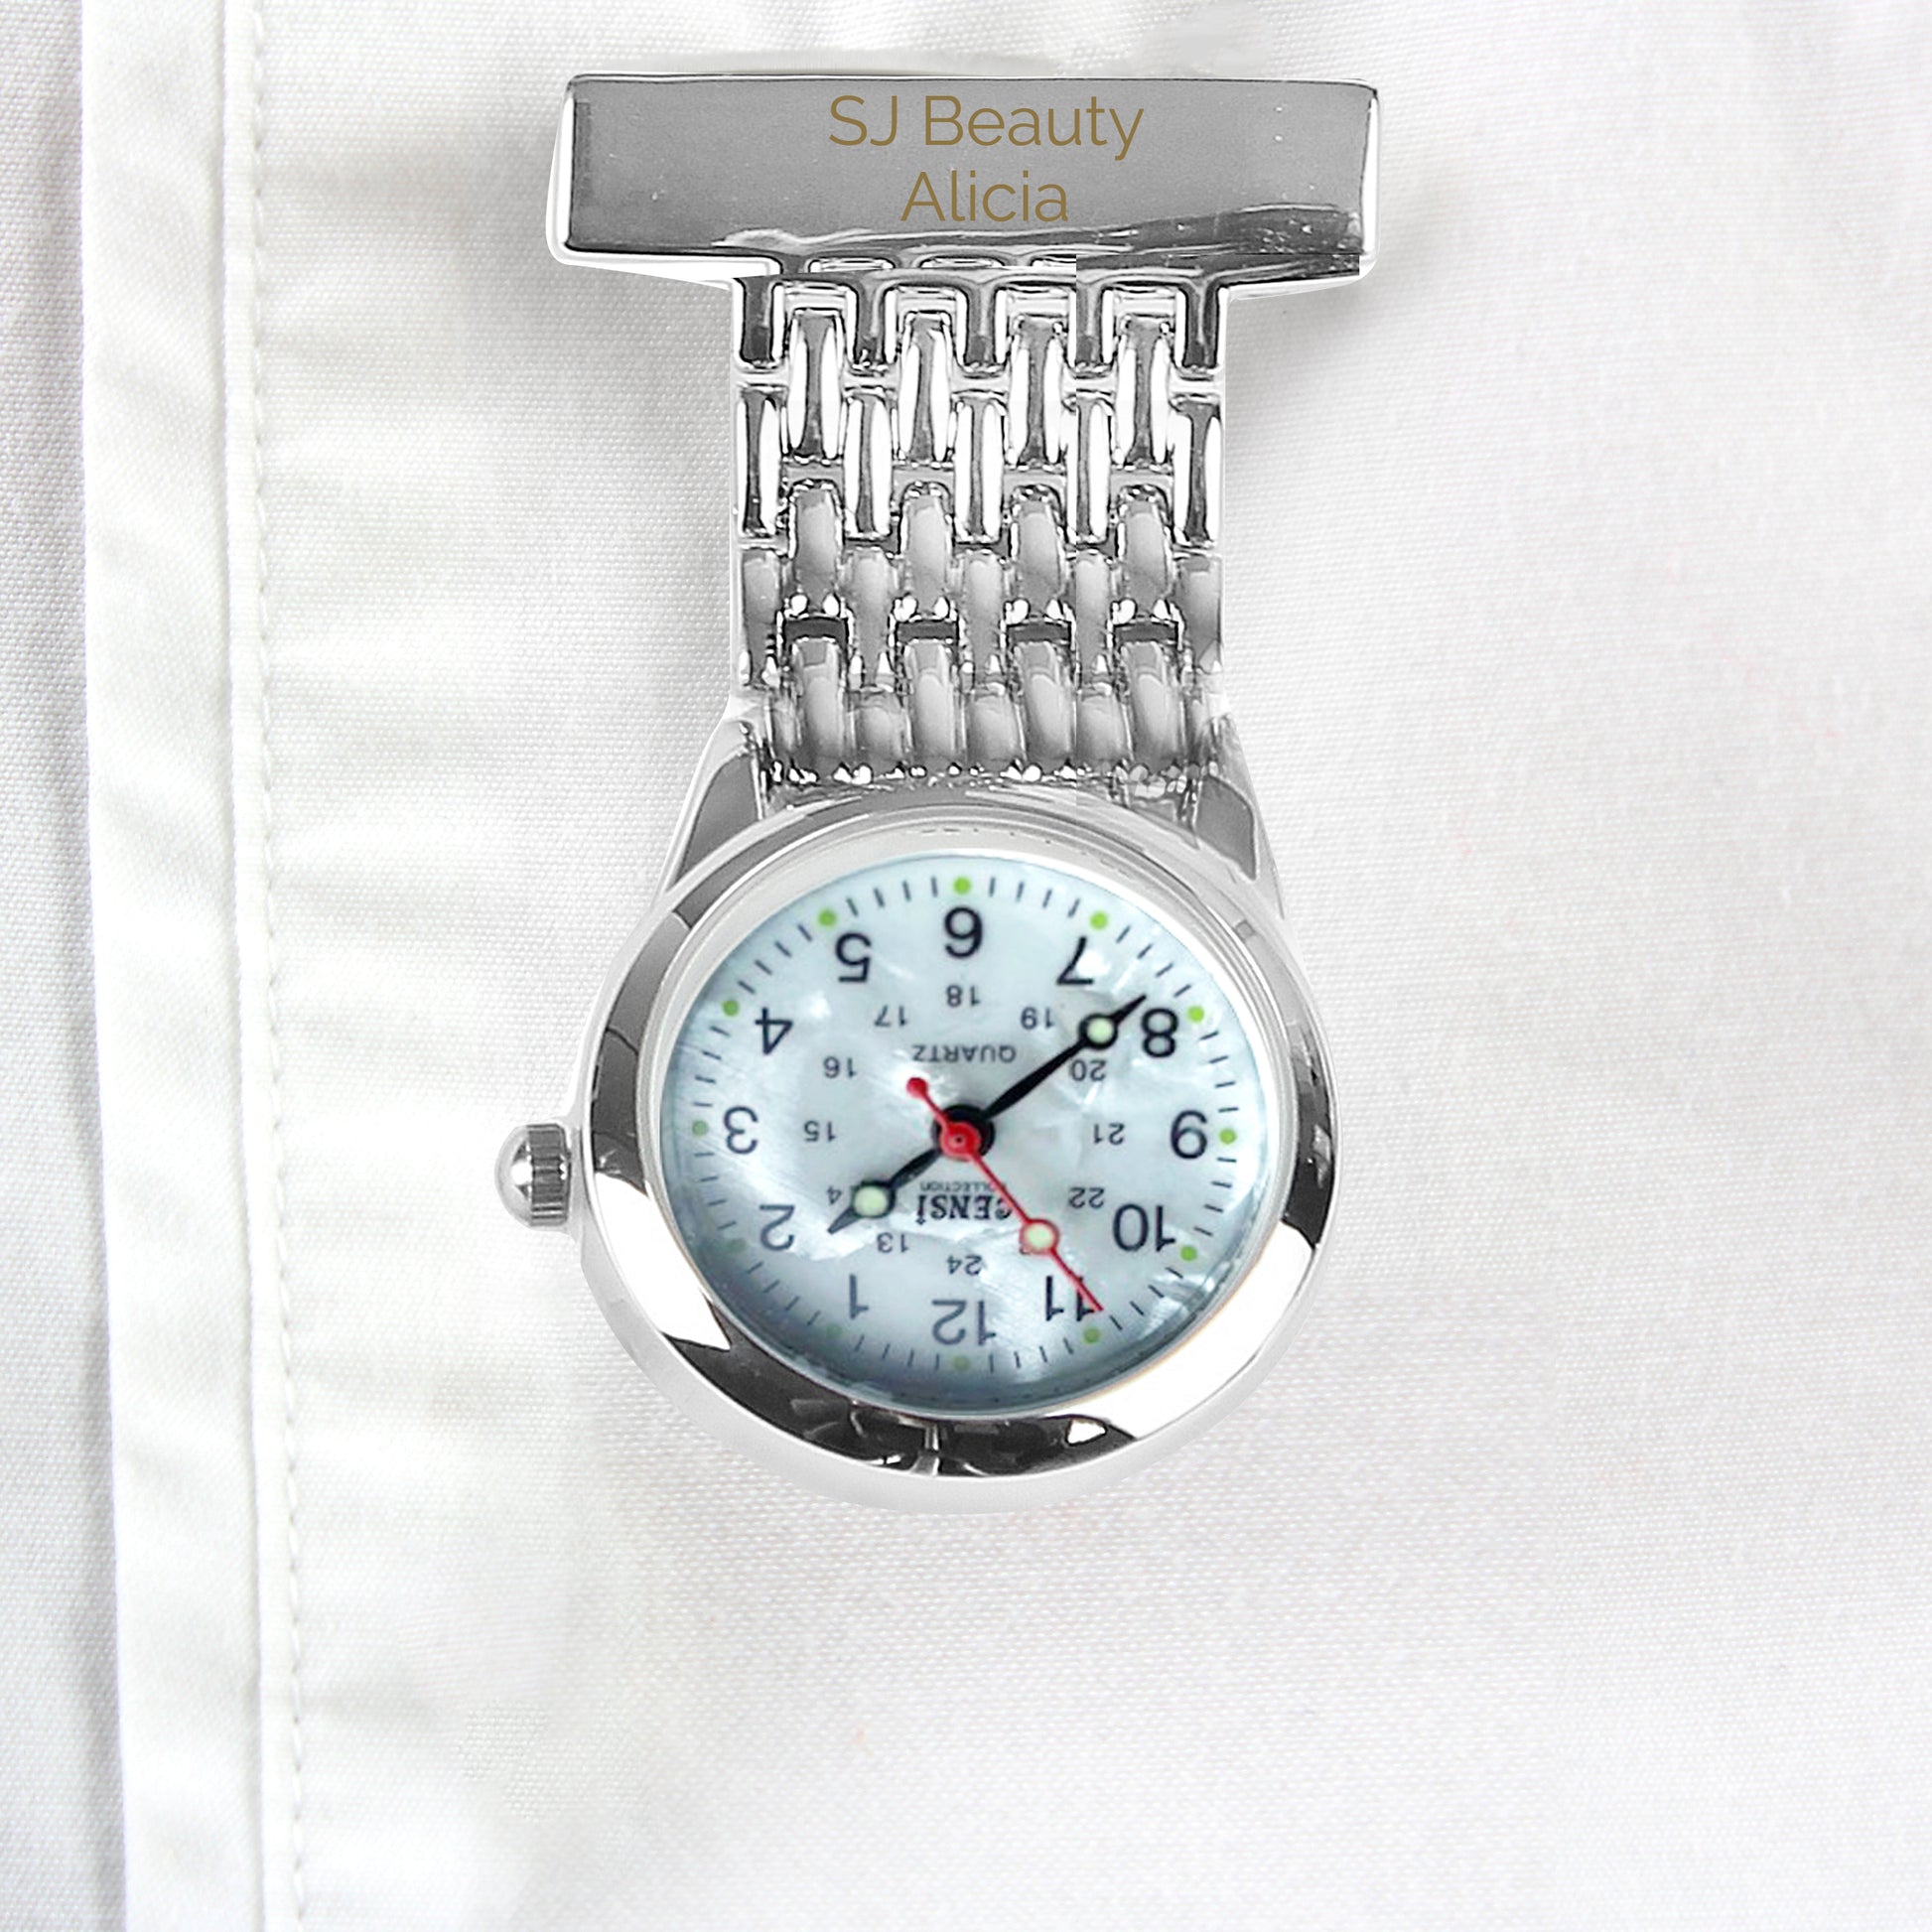 Personalised Nurse's Fob Watch - PCS Cufflinks & Gifts